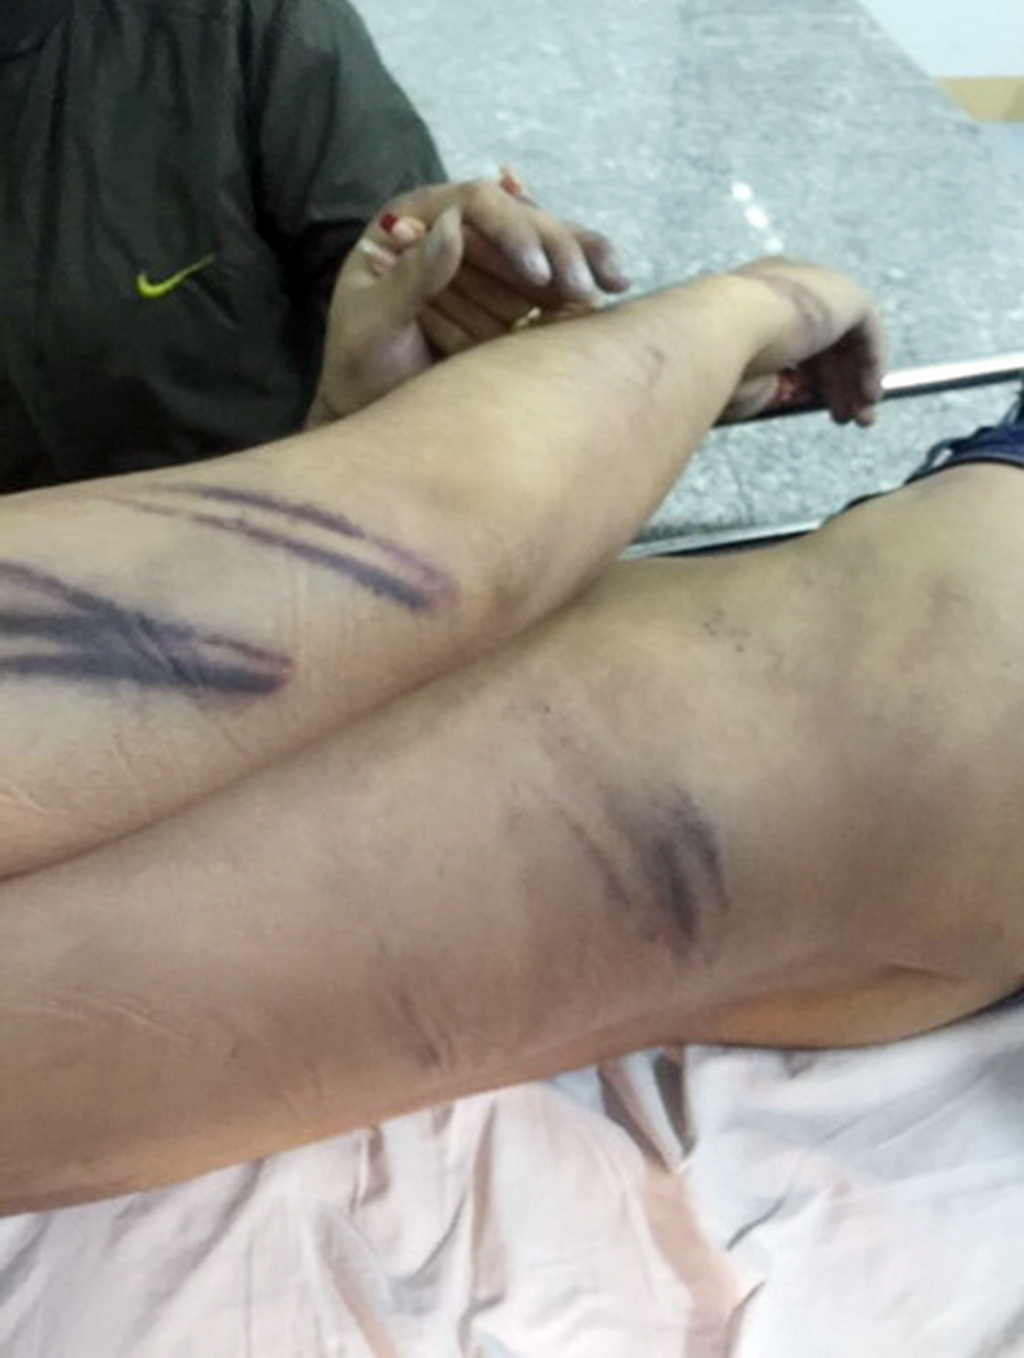 Man dies after alleged corporal punishment by police in Vietnam